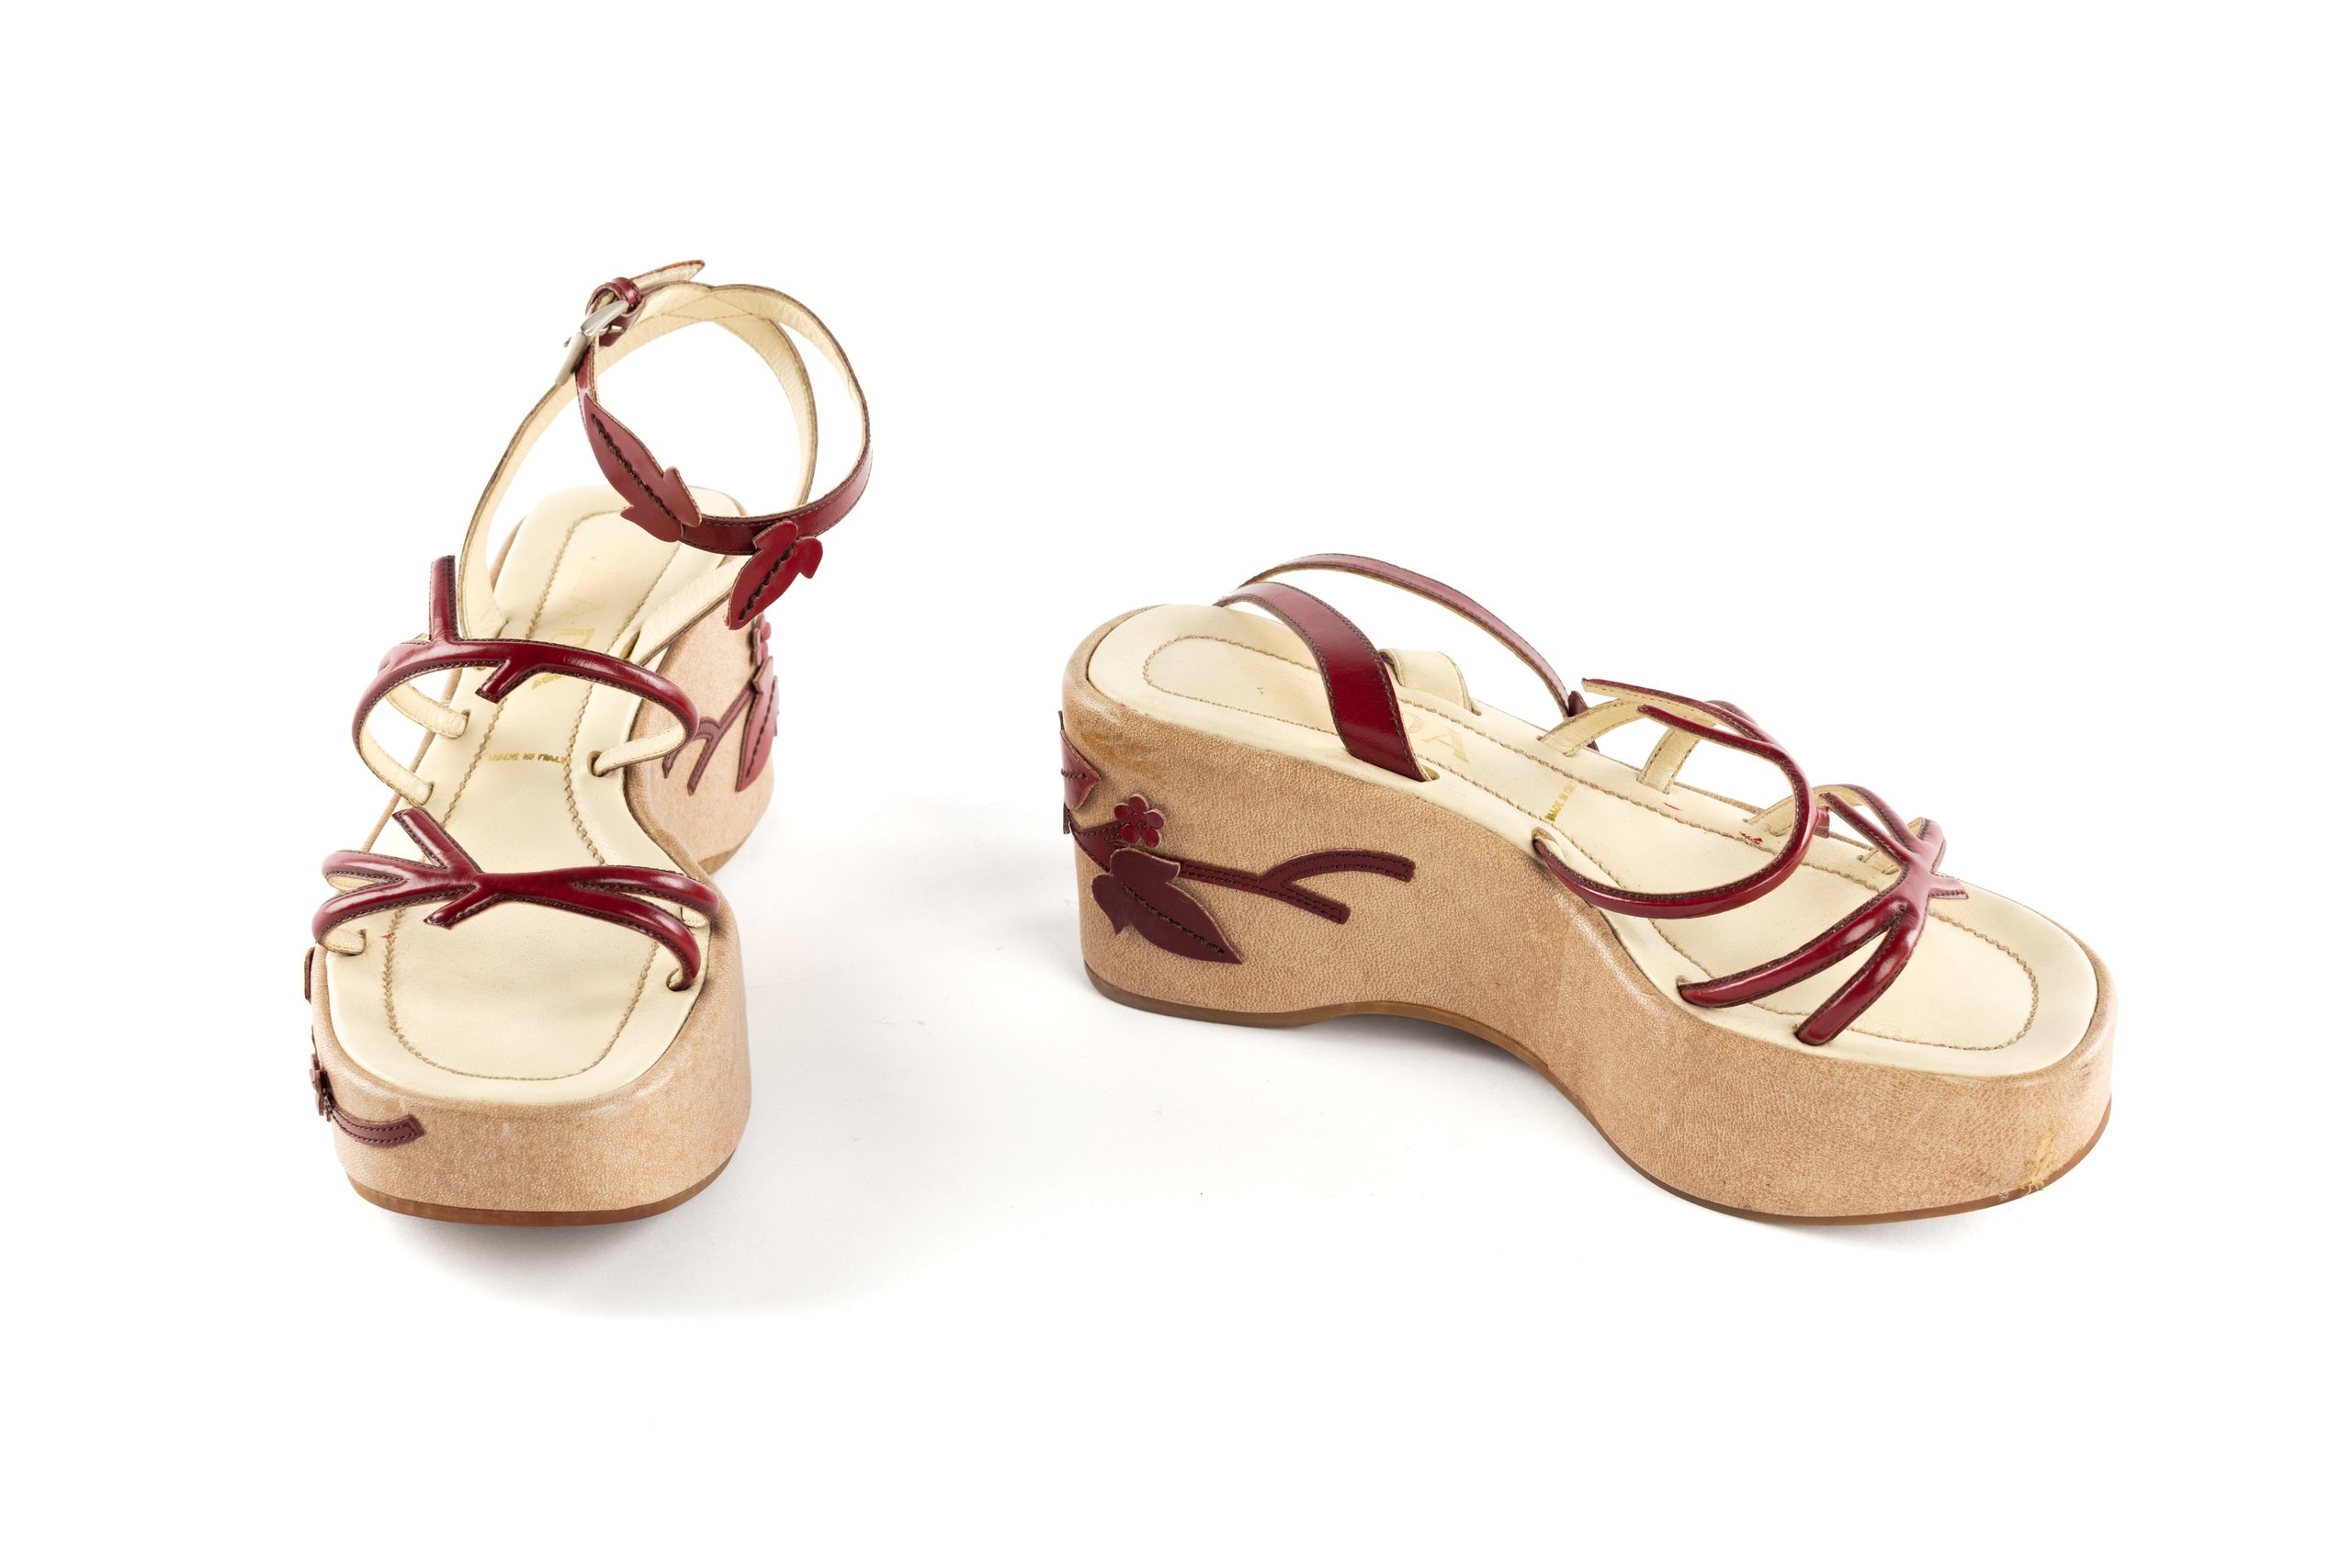 Pair of sandals by Prada worn by Catherine Martin